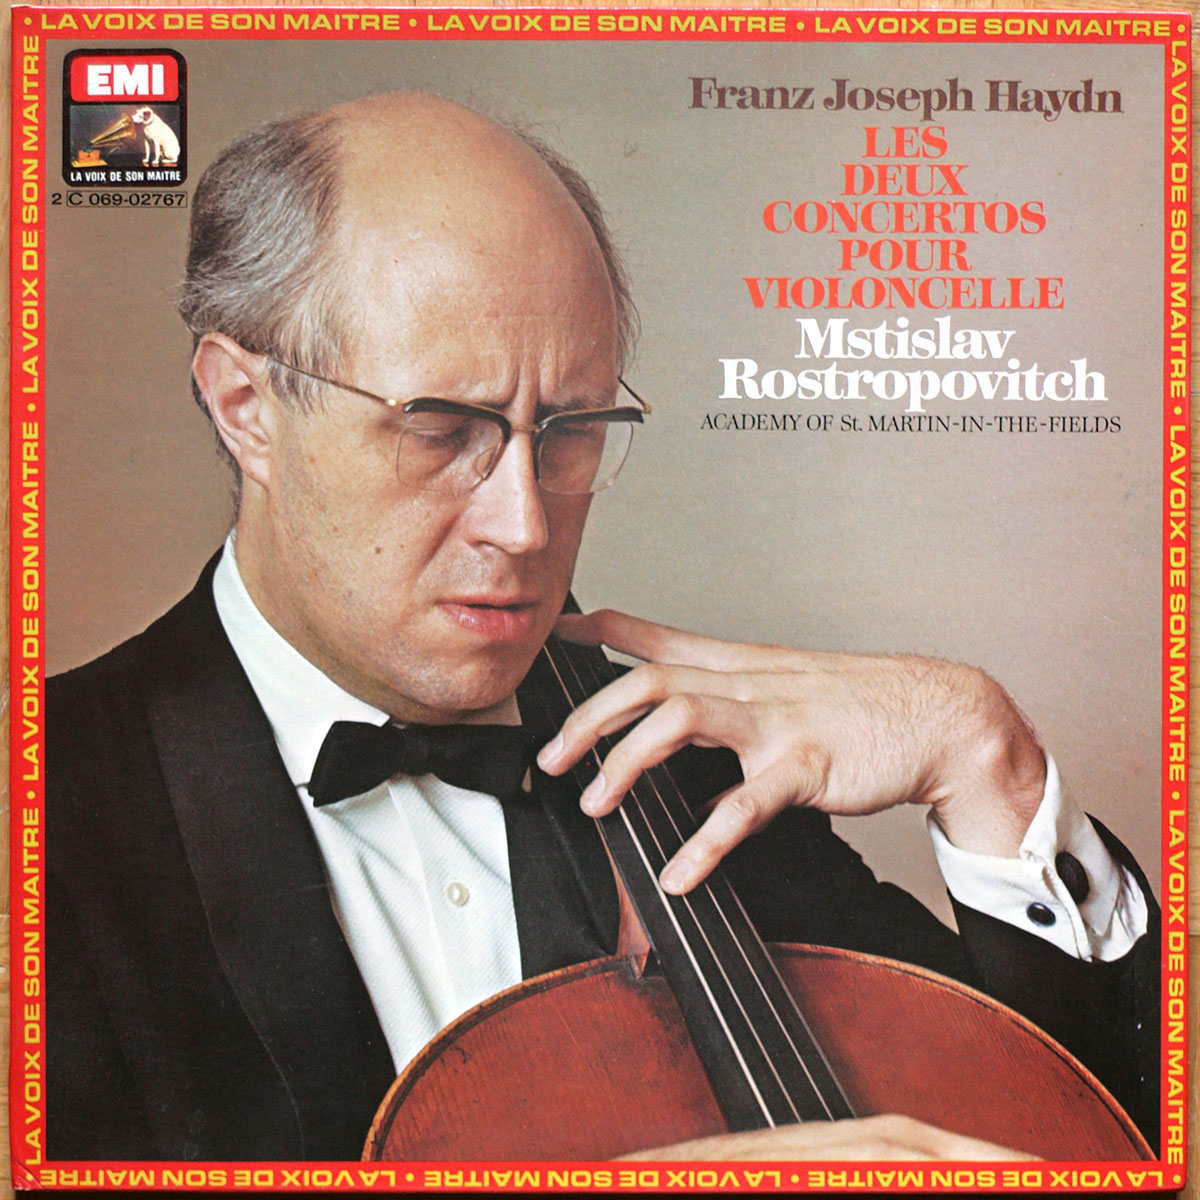 Haydn • Concertos pour violoncelle n° 1 & 2 • Cello concertos • Konzert für Violoncello Nr. 1 & 2 • EMI 2C 069-02767 • Mstislav Rostropovitch • Academy Of St. Martin-In-The-Fields